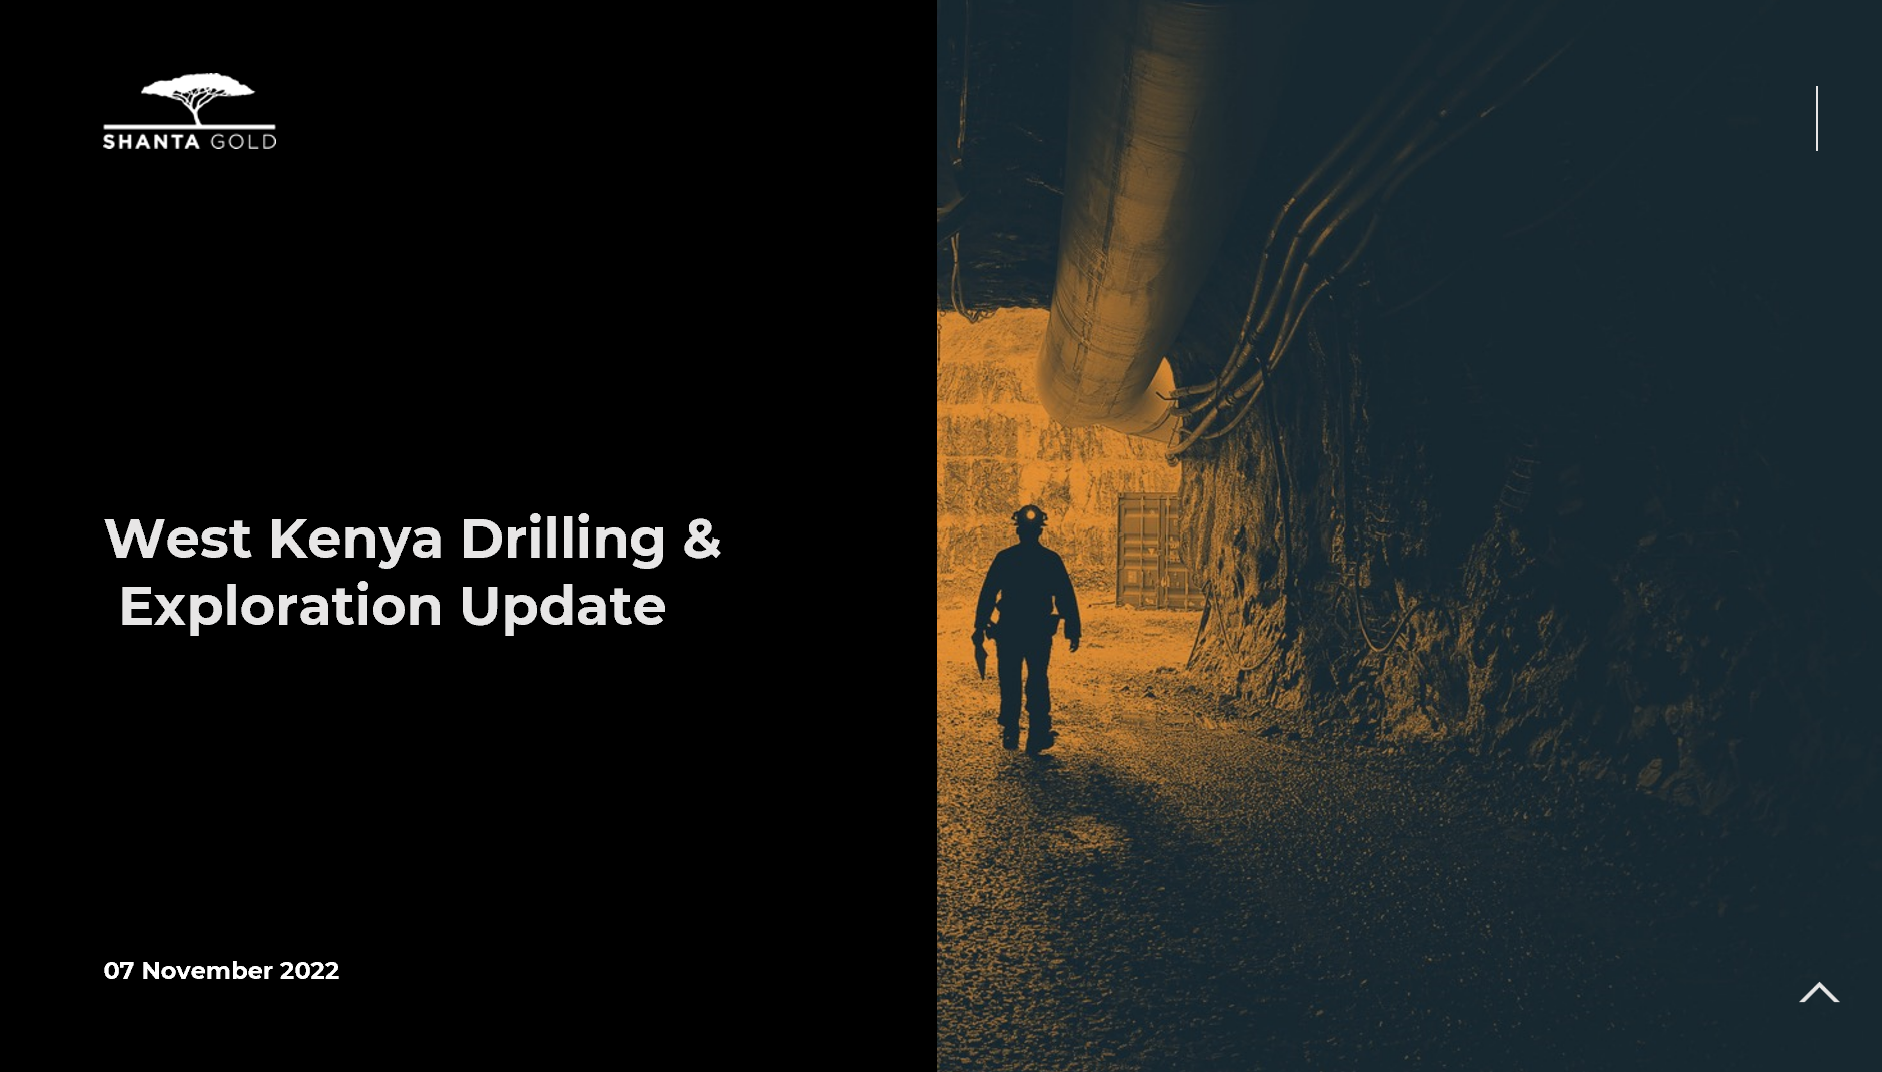 West Kenya Phase 2 High Grade Drilling Update